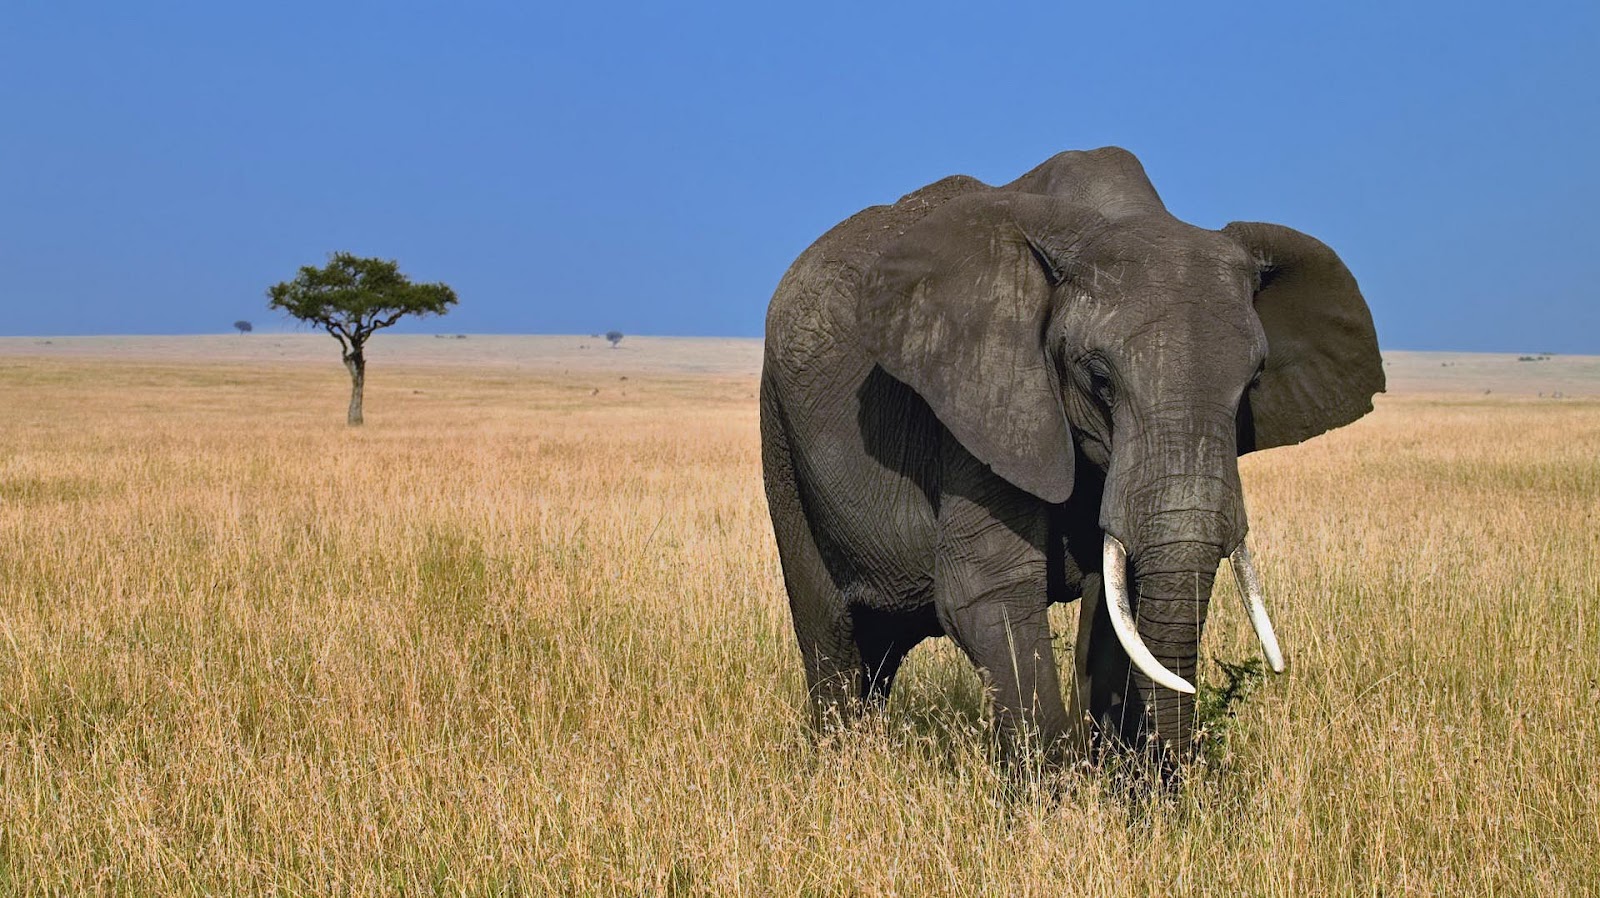 wildtier tapete hd,elefant,elefanten und mammuts,landtier,tierwelt,indischer elefant